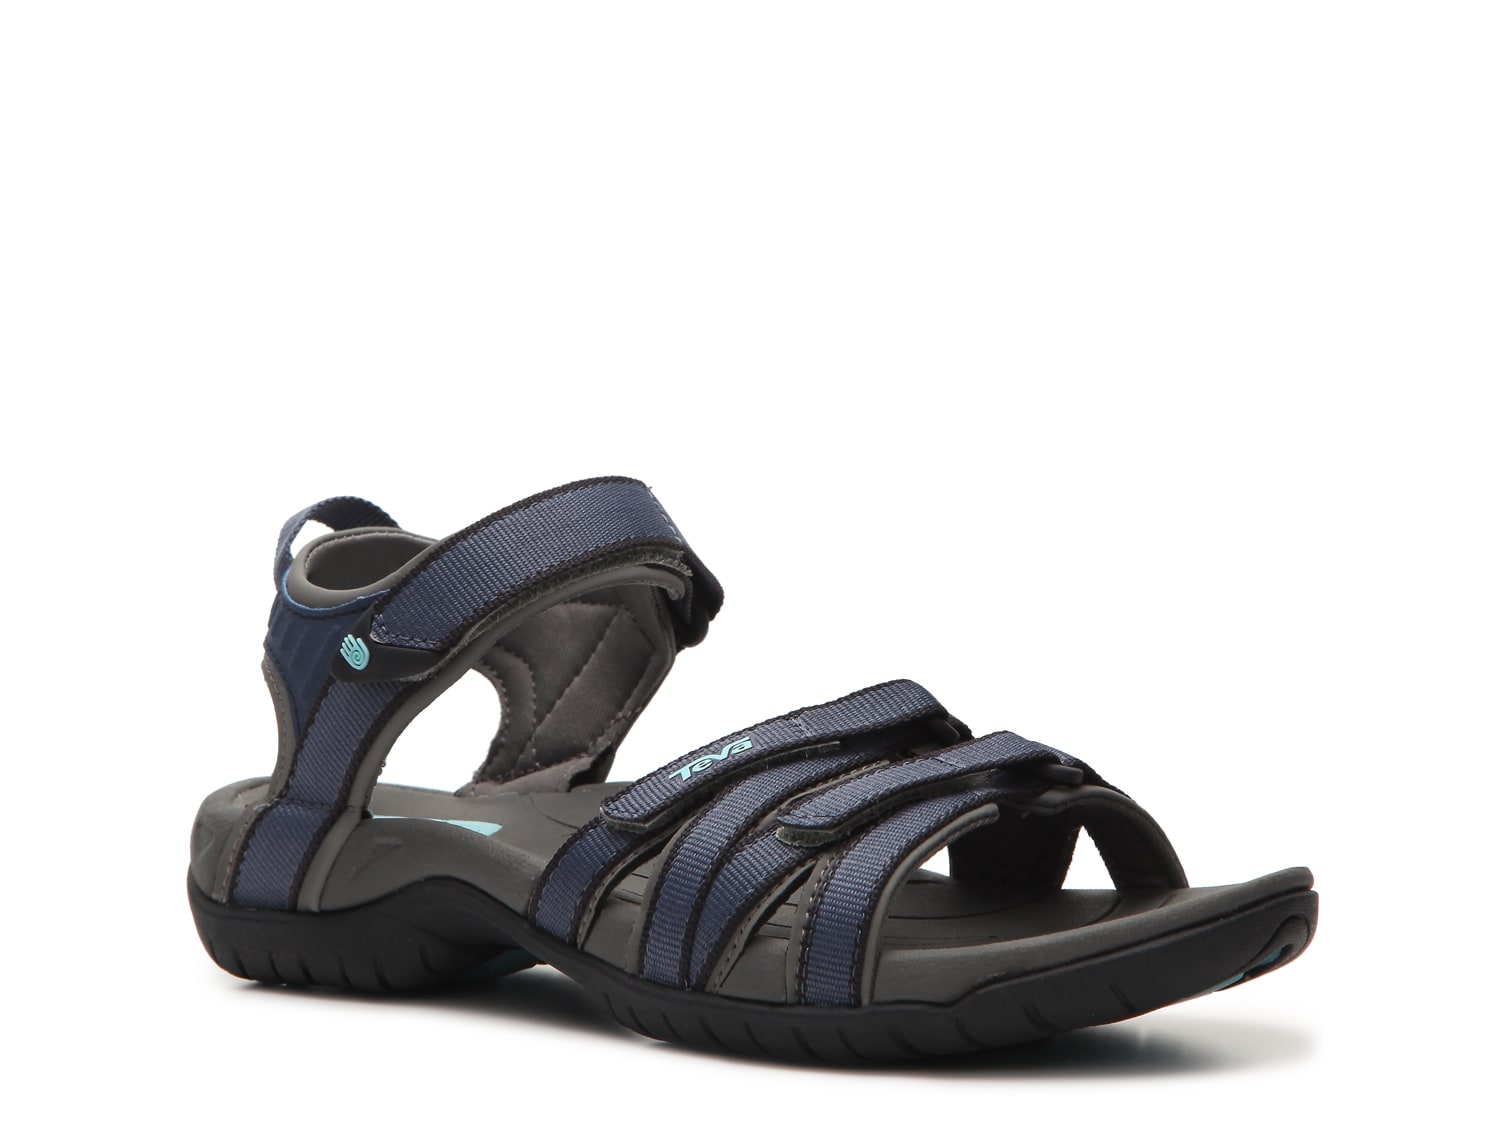 slip resistant sandals